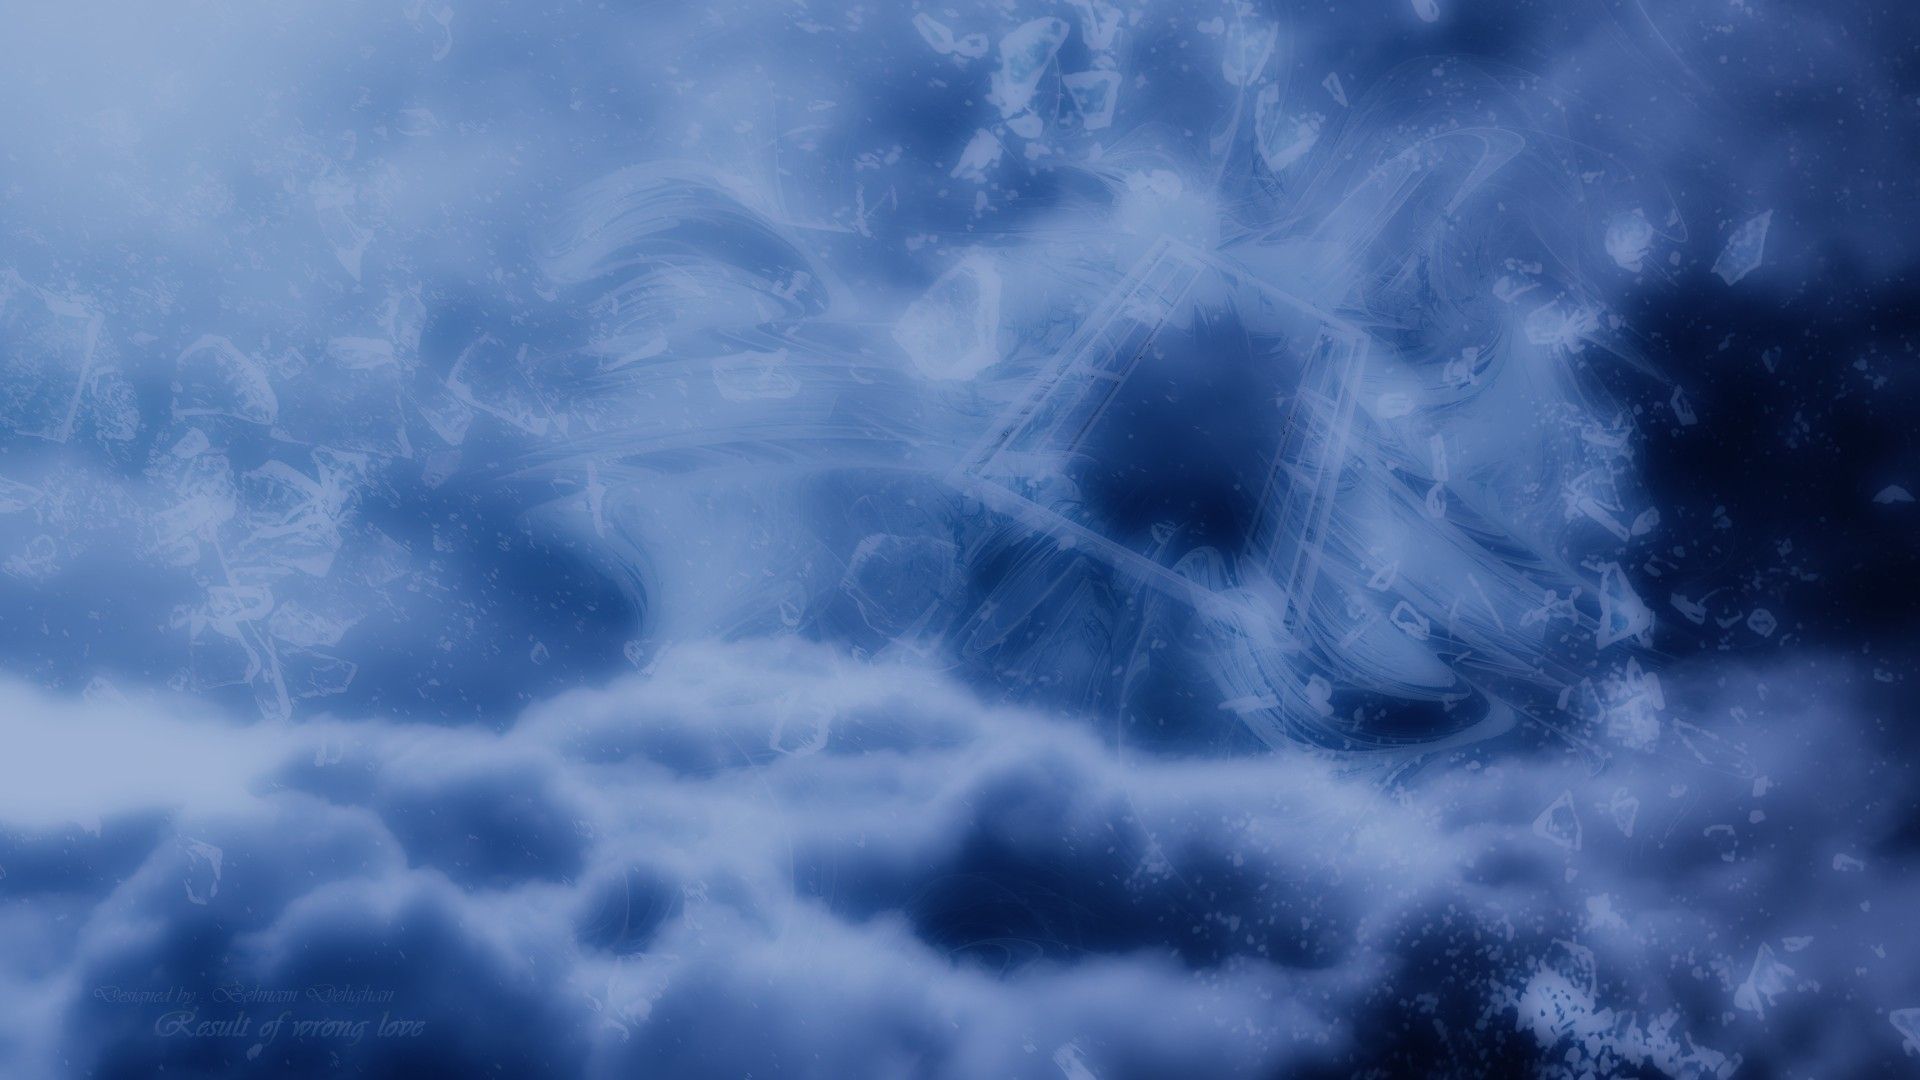 Blue Aesthetic Cloud Wallpaper